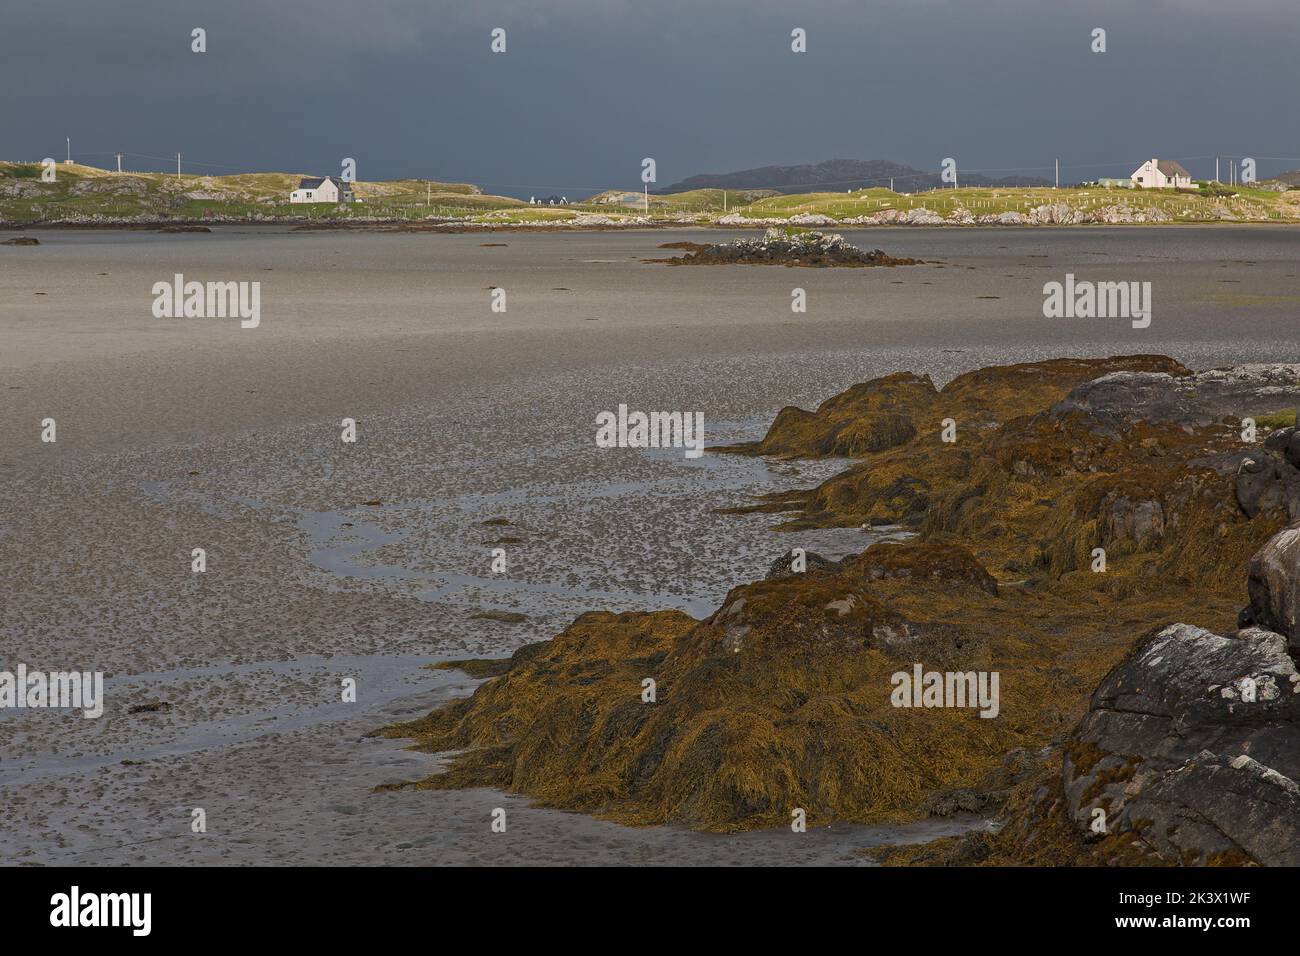 Rocks, Seaweed and Sodden Sand, Oitir Mhór, Uist, North Uist, Hebrides, Outer Hebrides, Western Isles, Scotland, United Kingdom, Great Britain Stock Photo